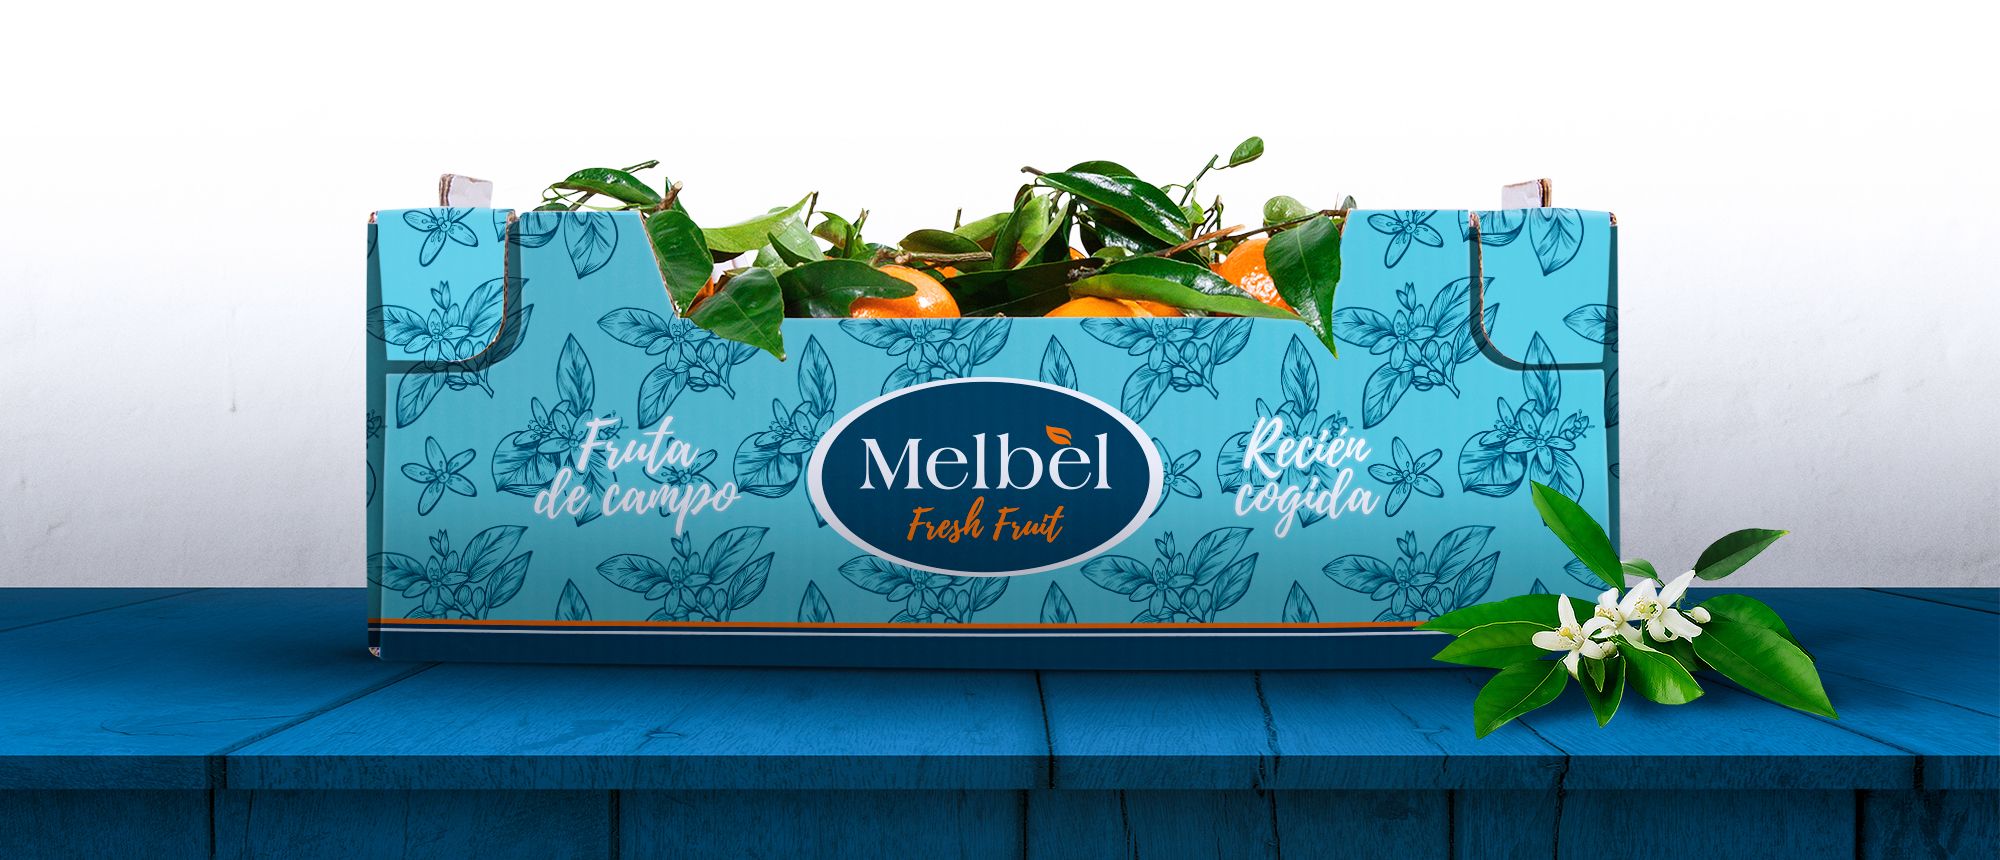 Melbel cardboard box